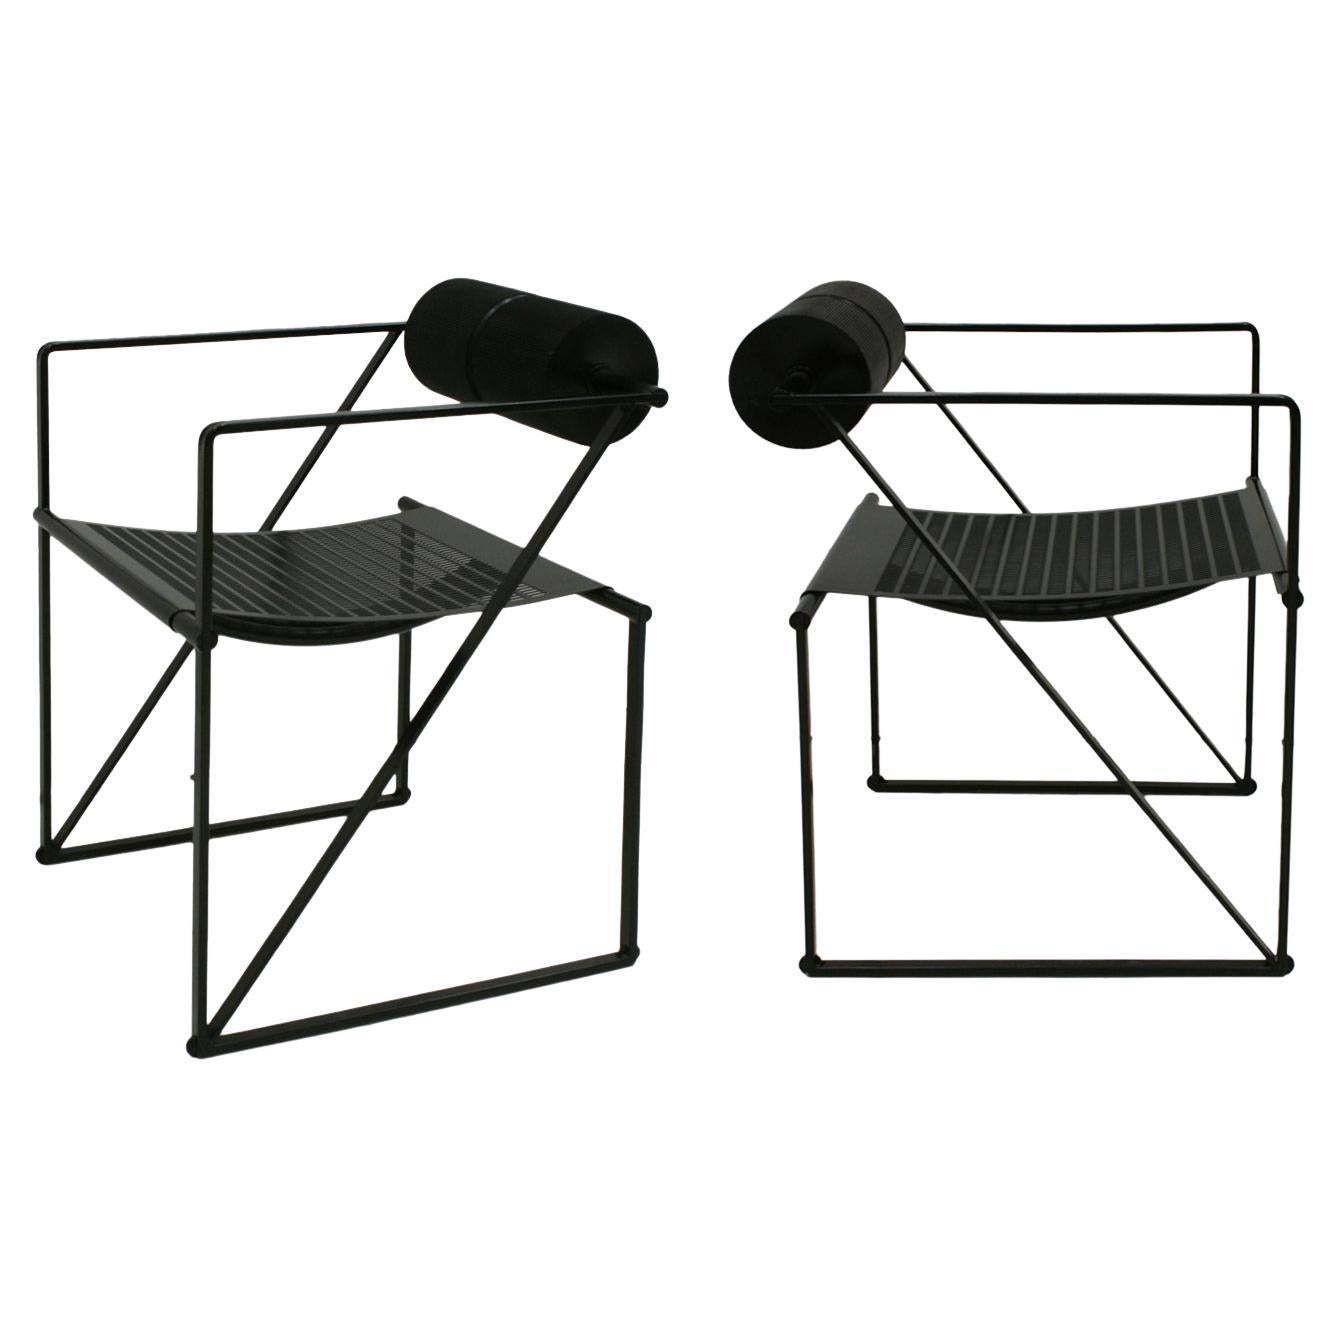 Mid-Century Modern Pair of Chairs Mod "Seconda" Designed by Mario Botta, 1982